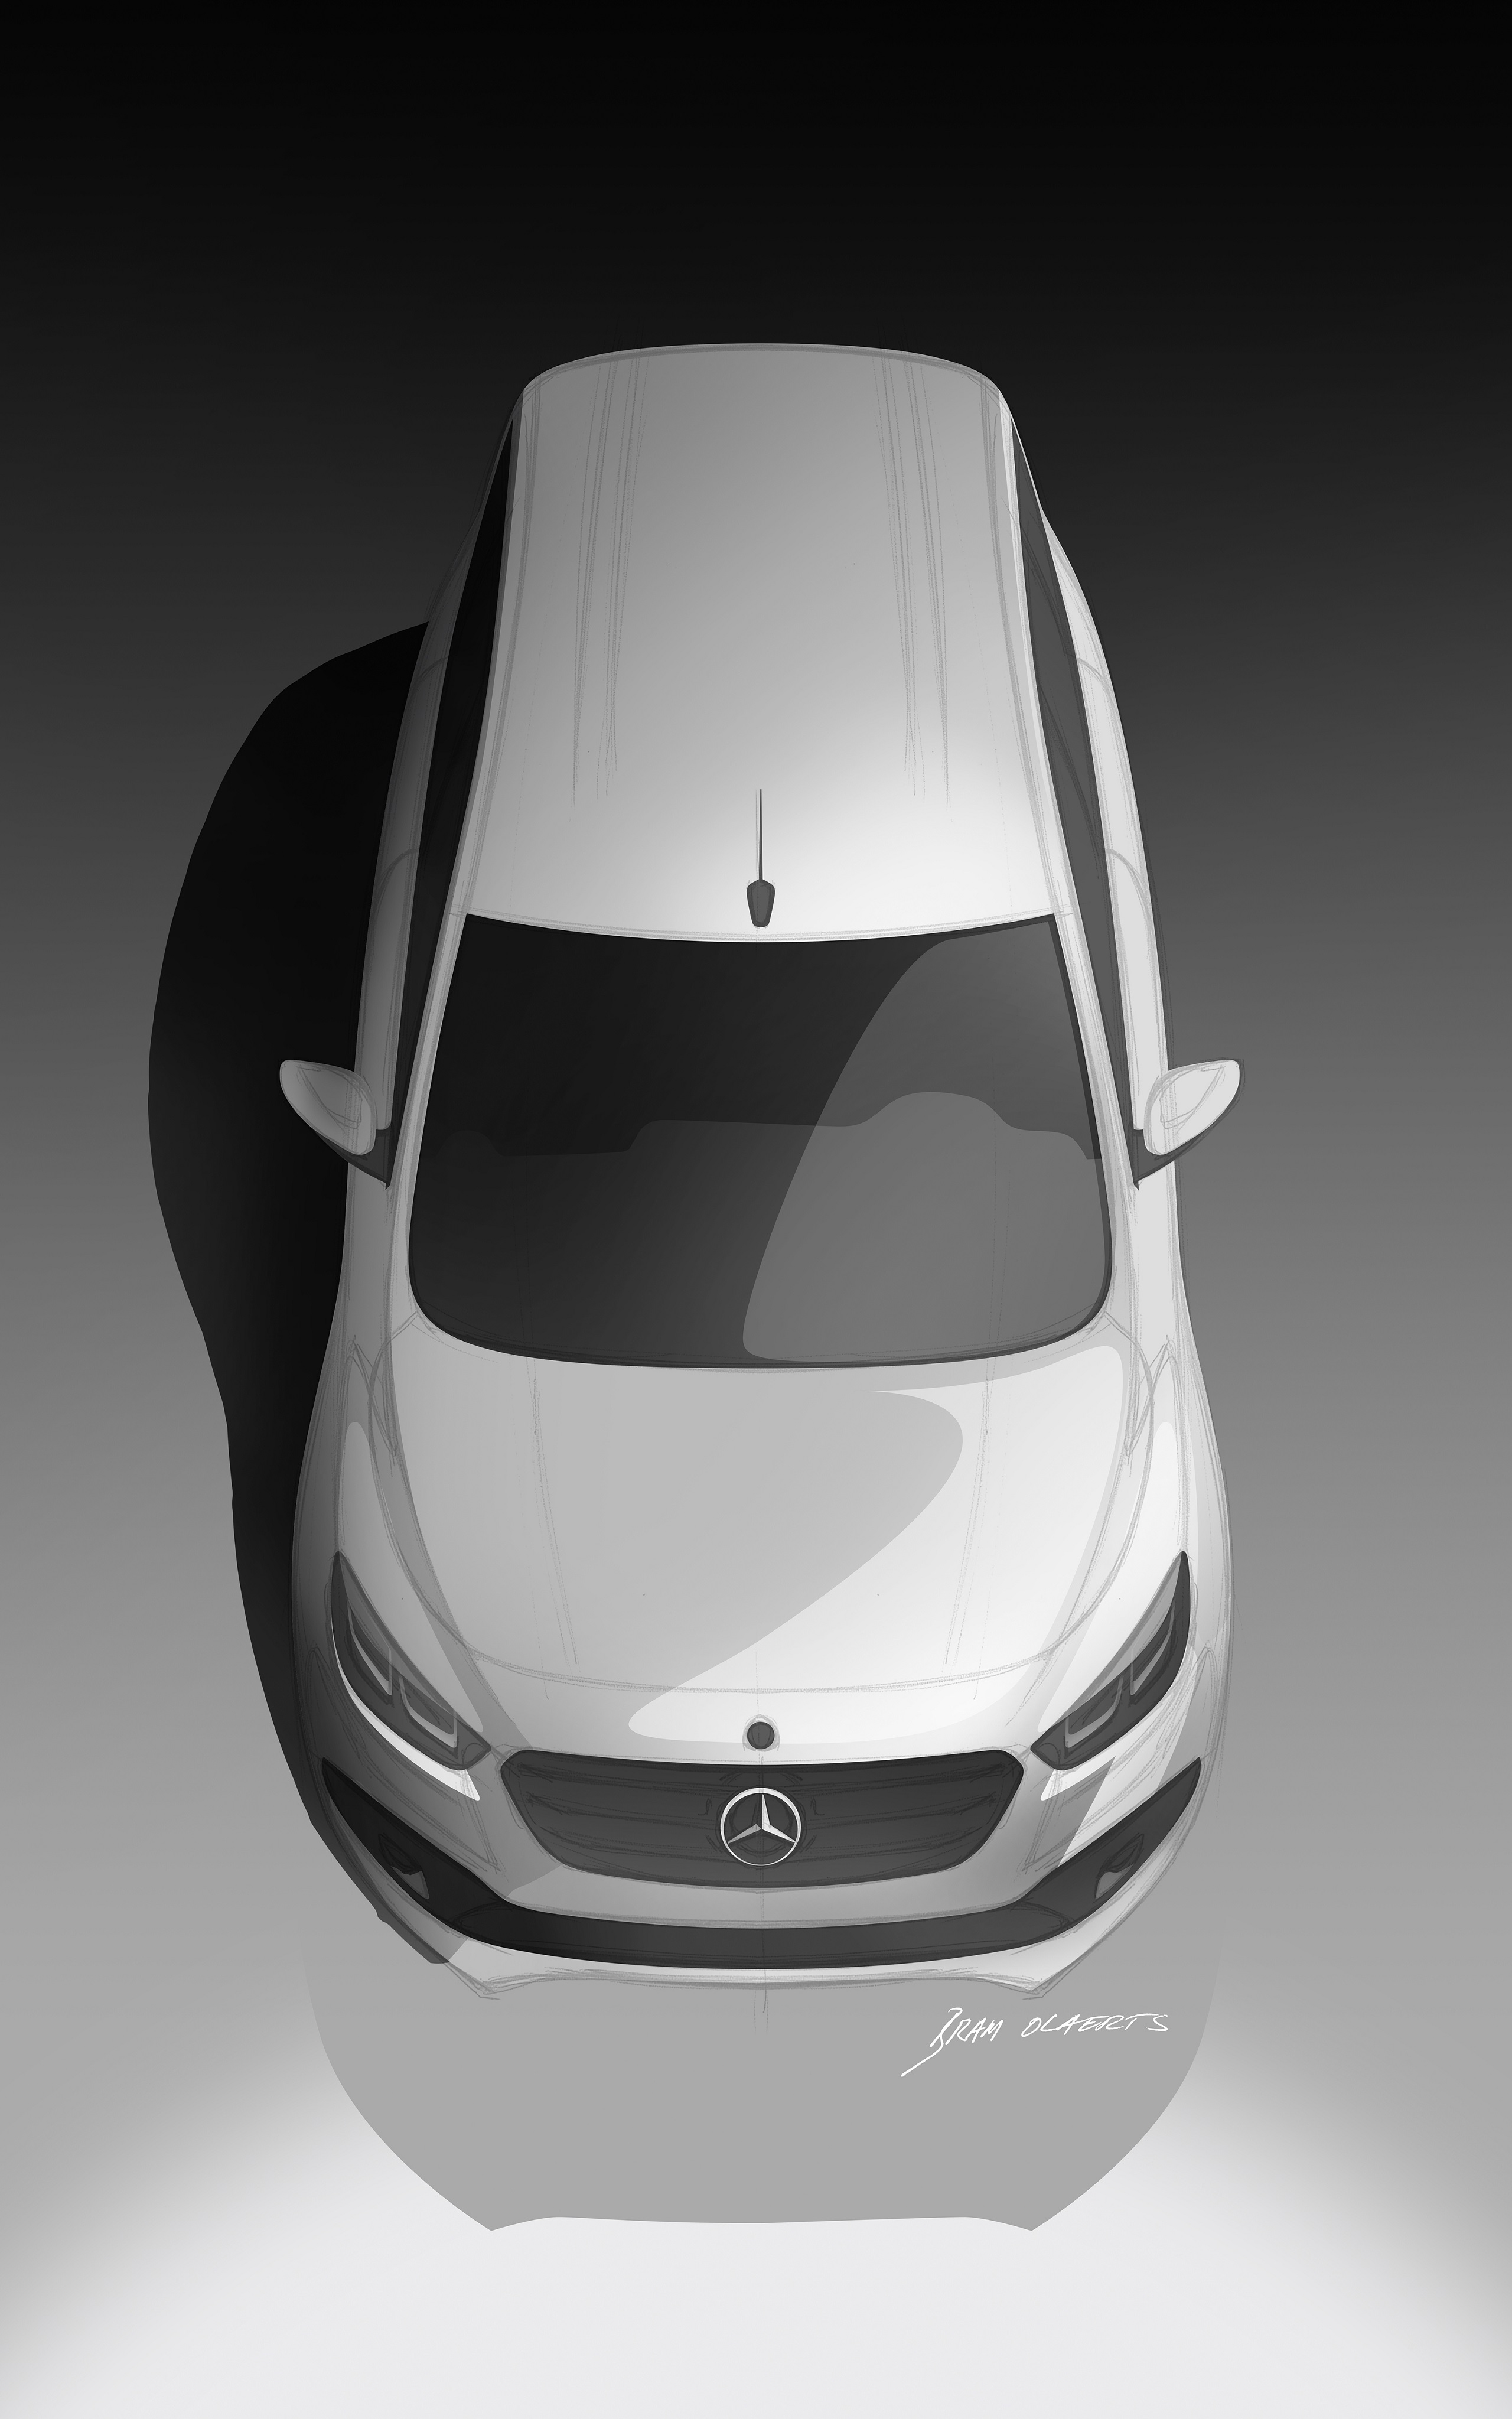 2022 Mercedes-Benz Citan Design Sketch Wallpapers #103 of 115